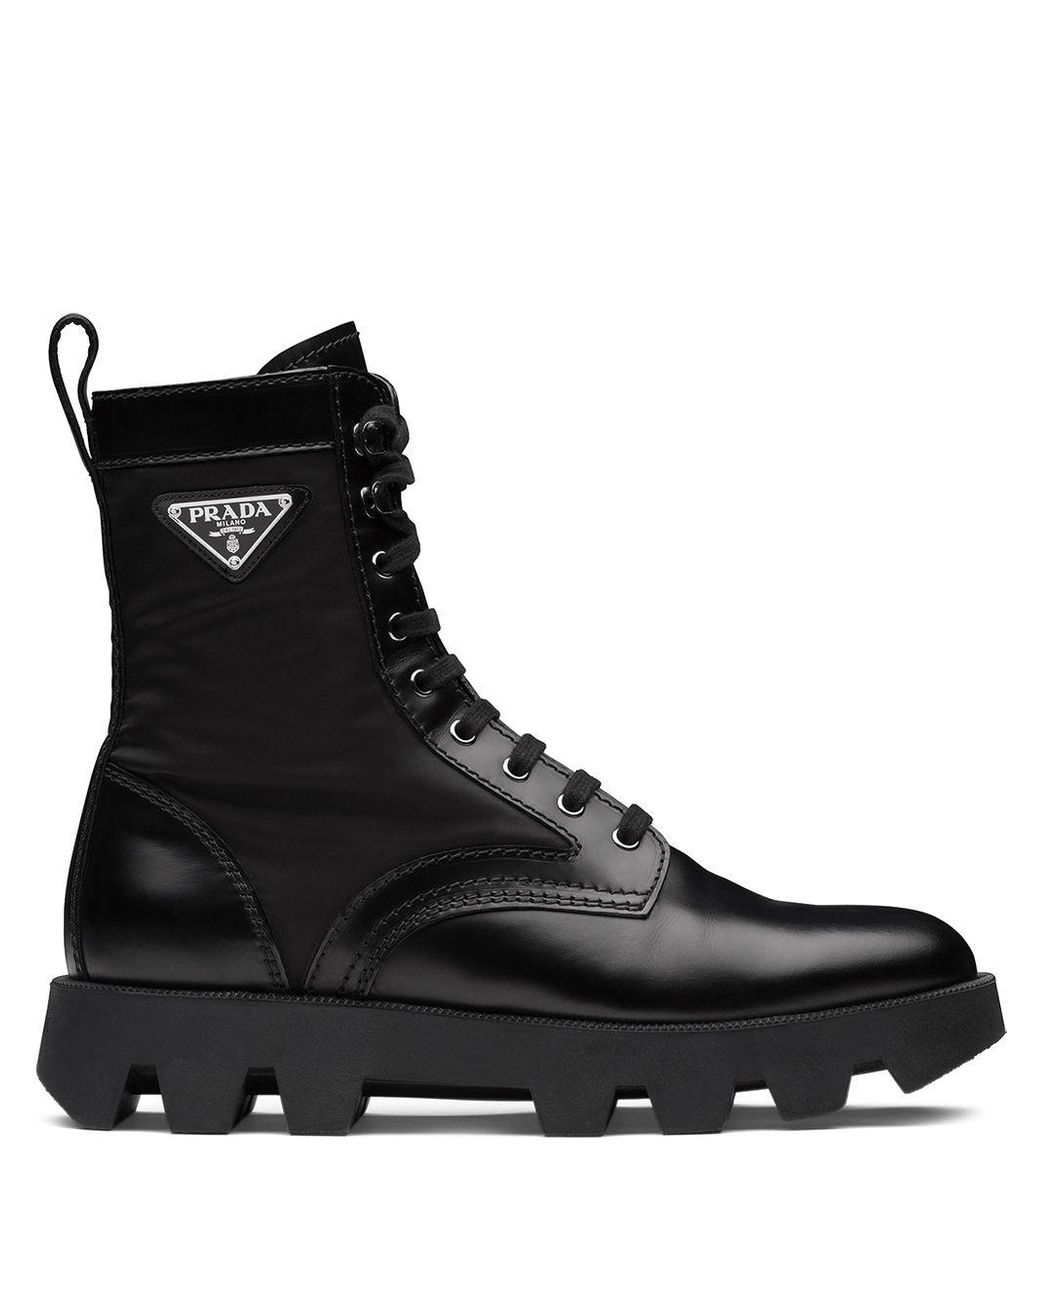 Prada Panelled Combat Boots in Black for Men - Lyst